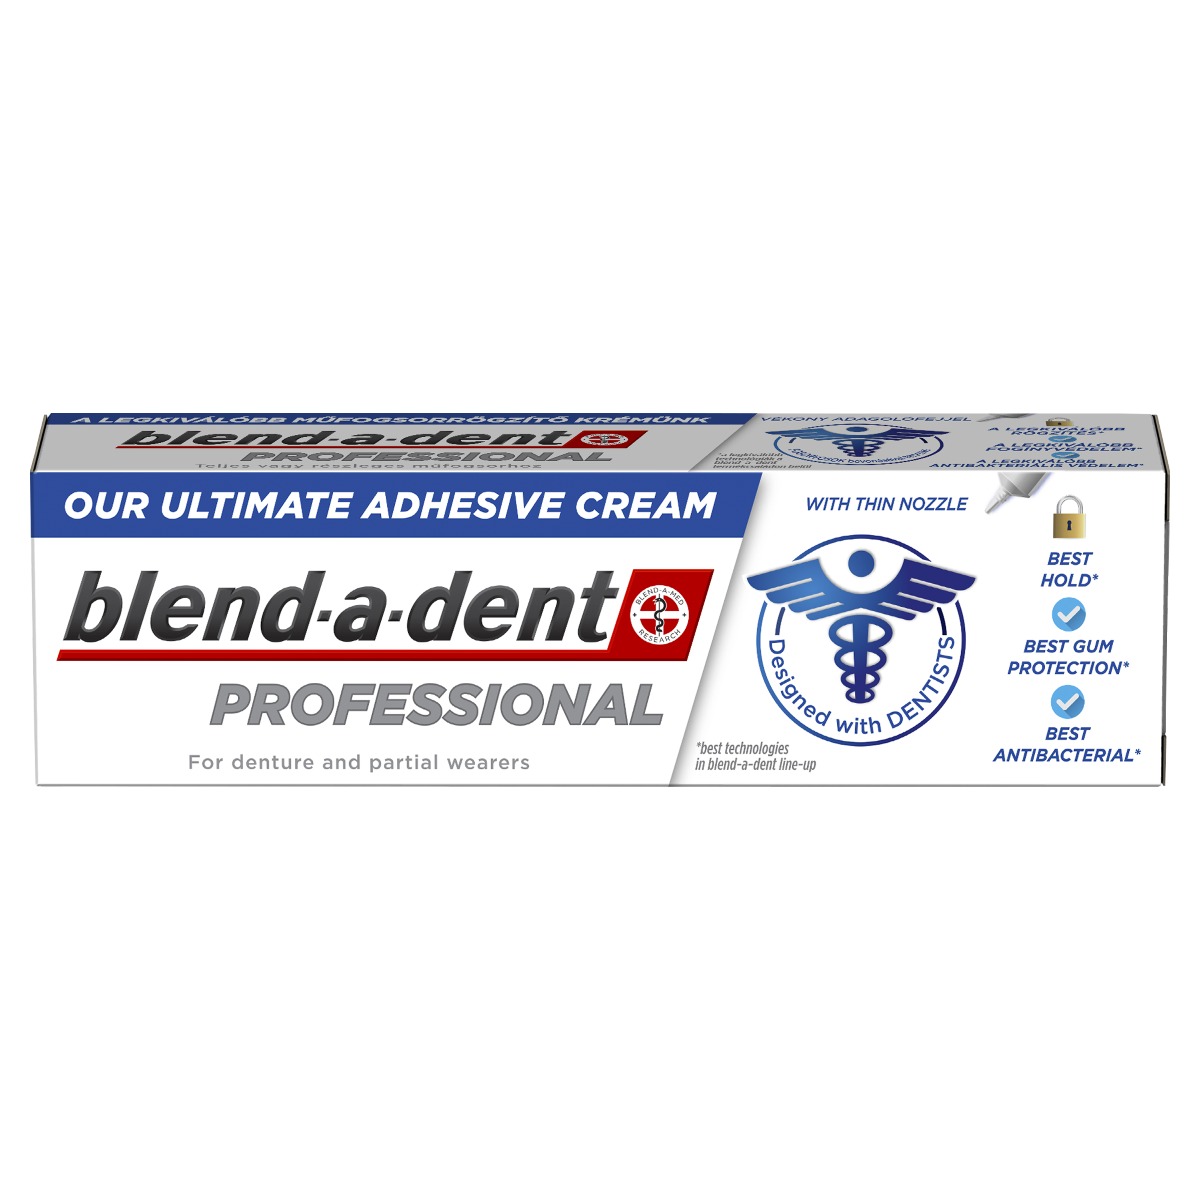 Blend-a-dent Professional upevňující krém 40 g Blend-a-dent